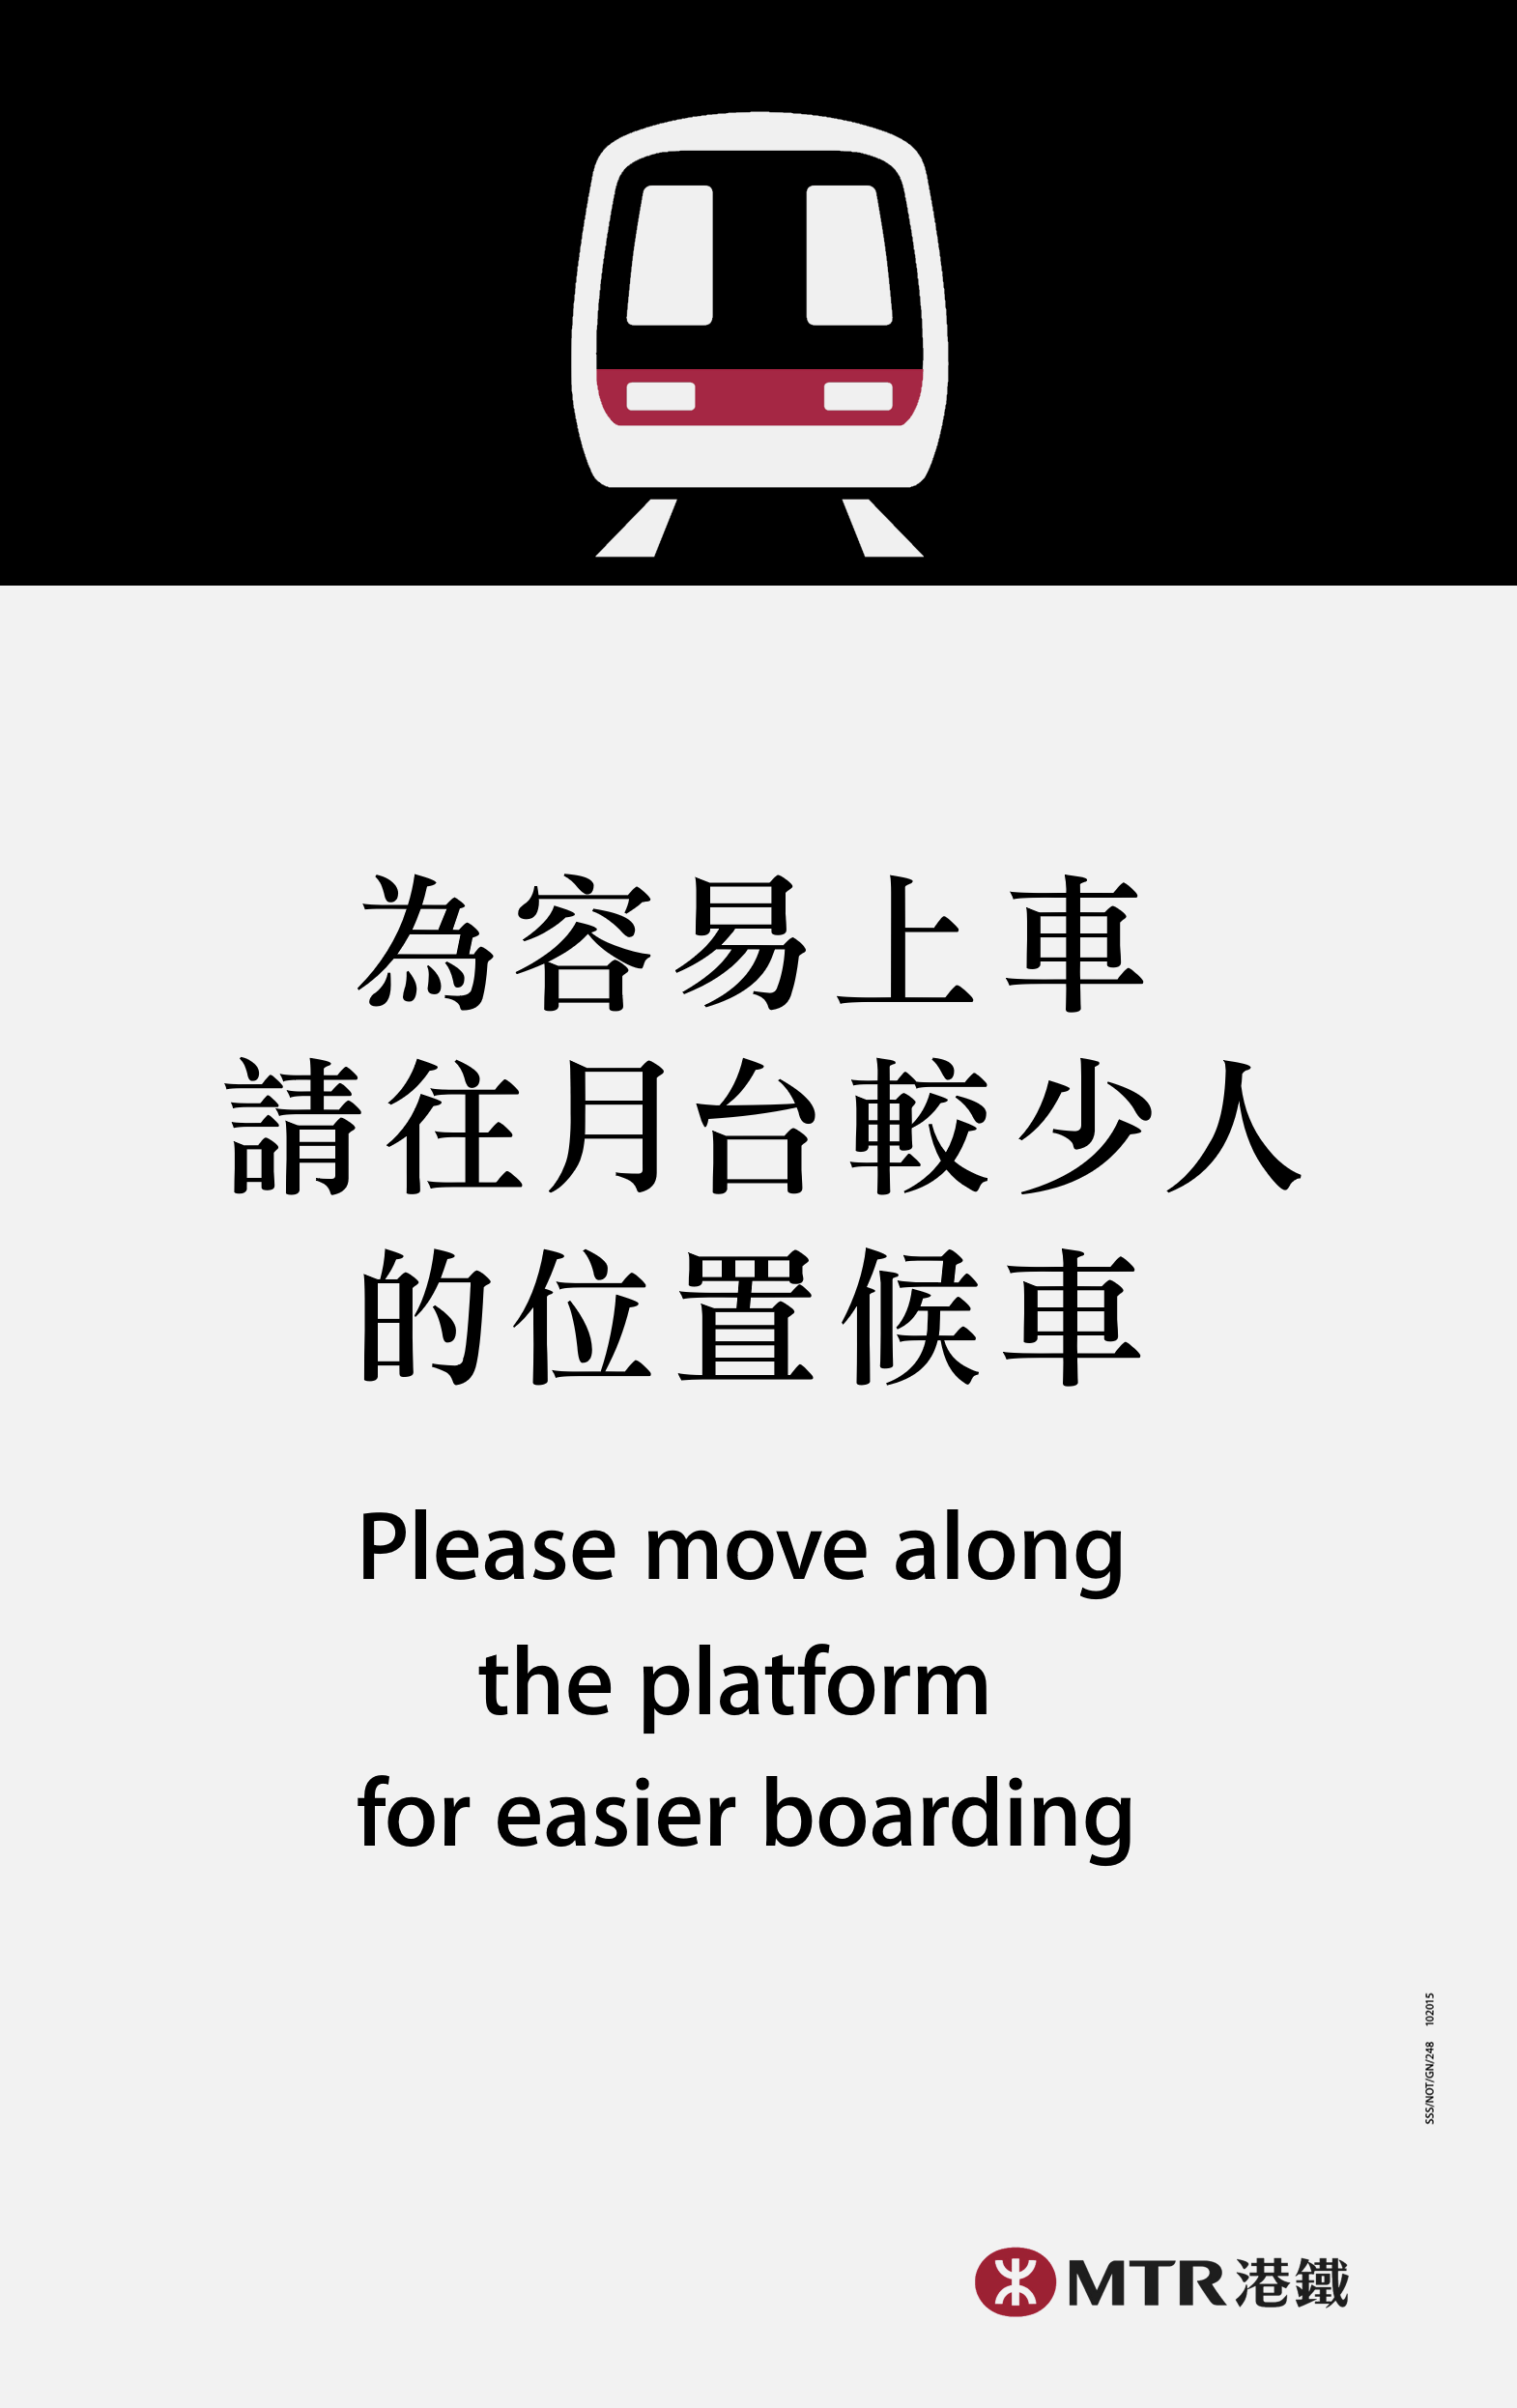 MTR poster: Move along the platform for easier boarding